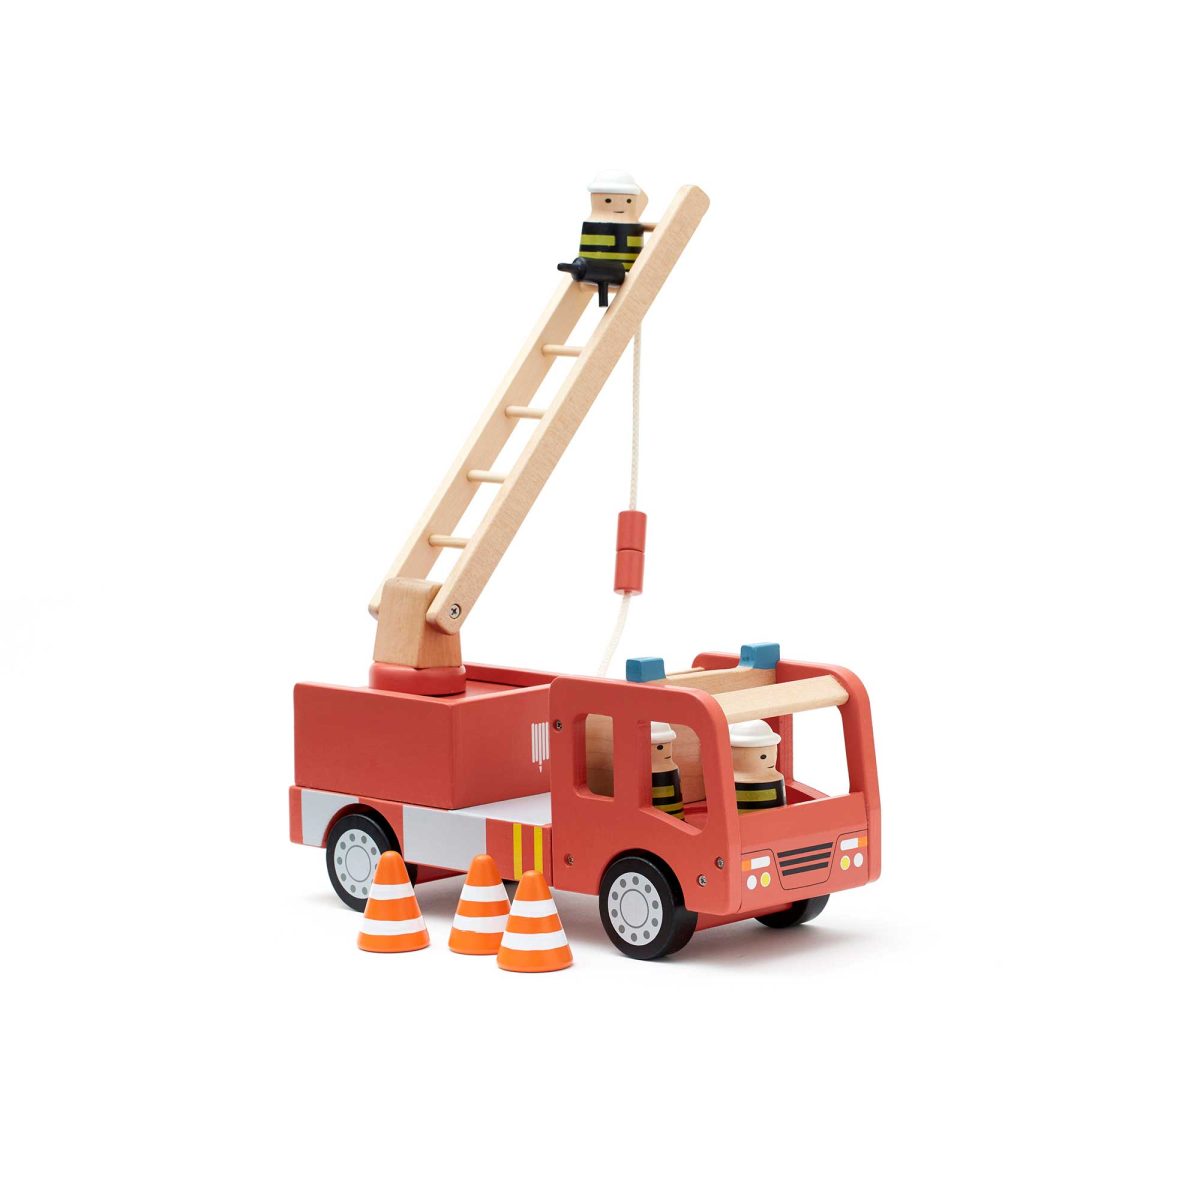 Kid's Concept Fire Truck